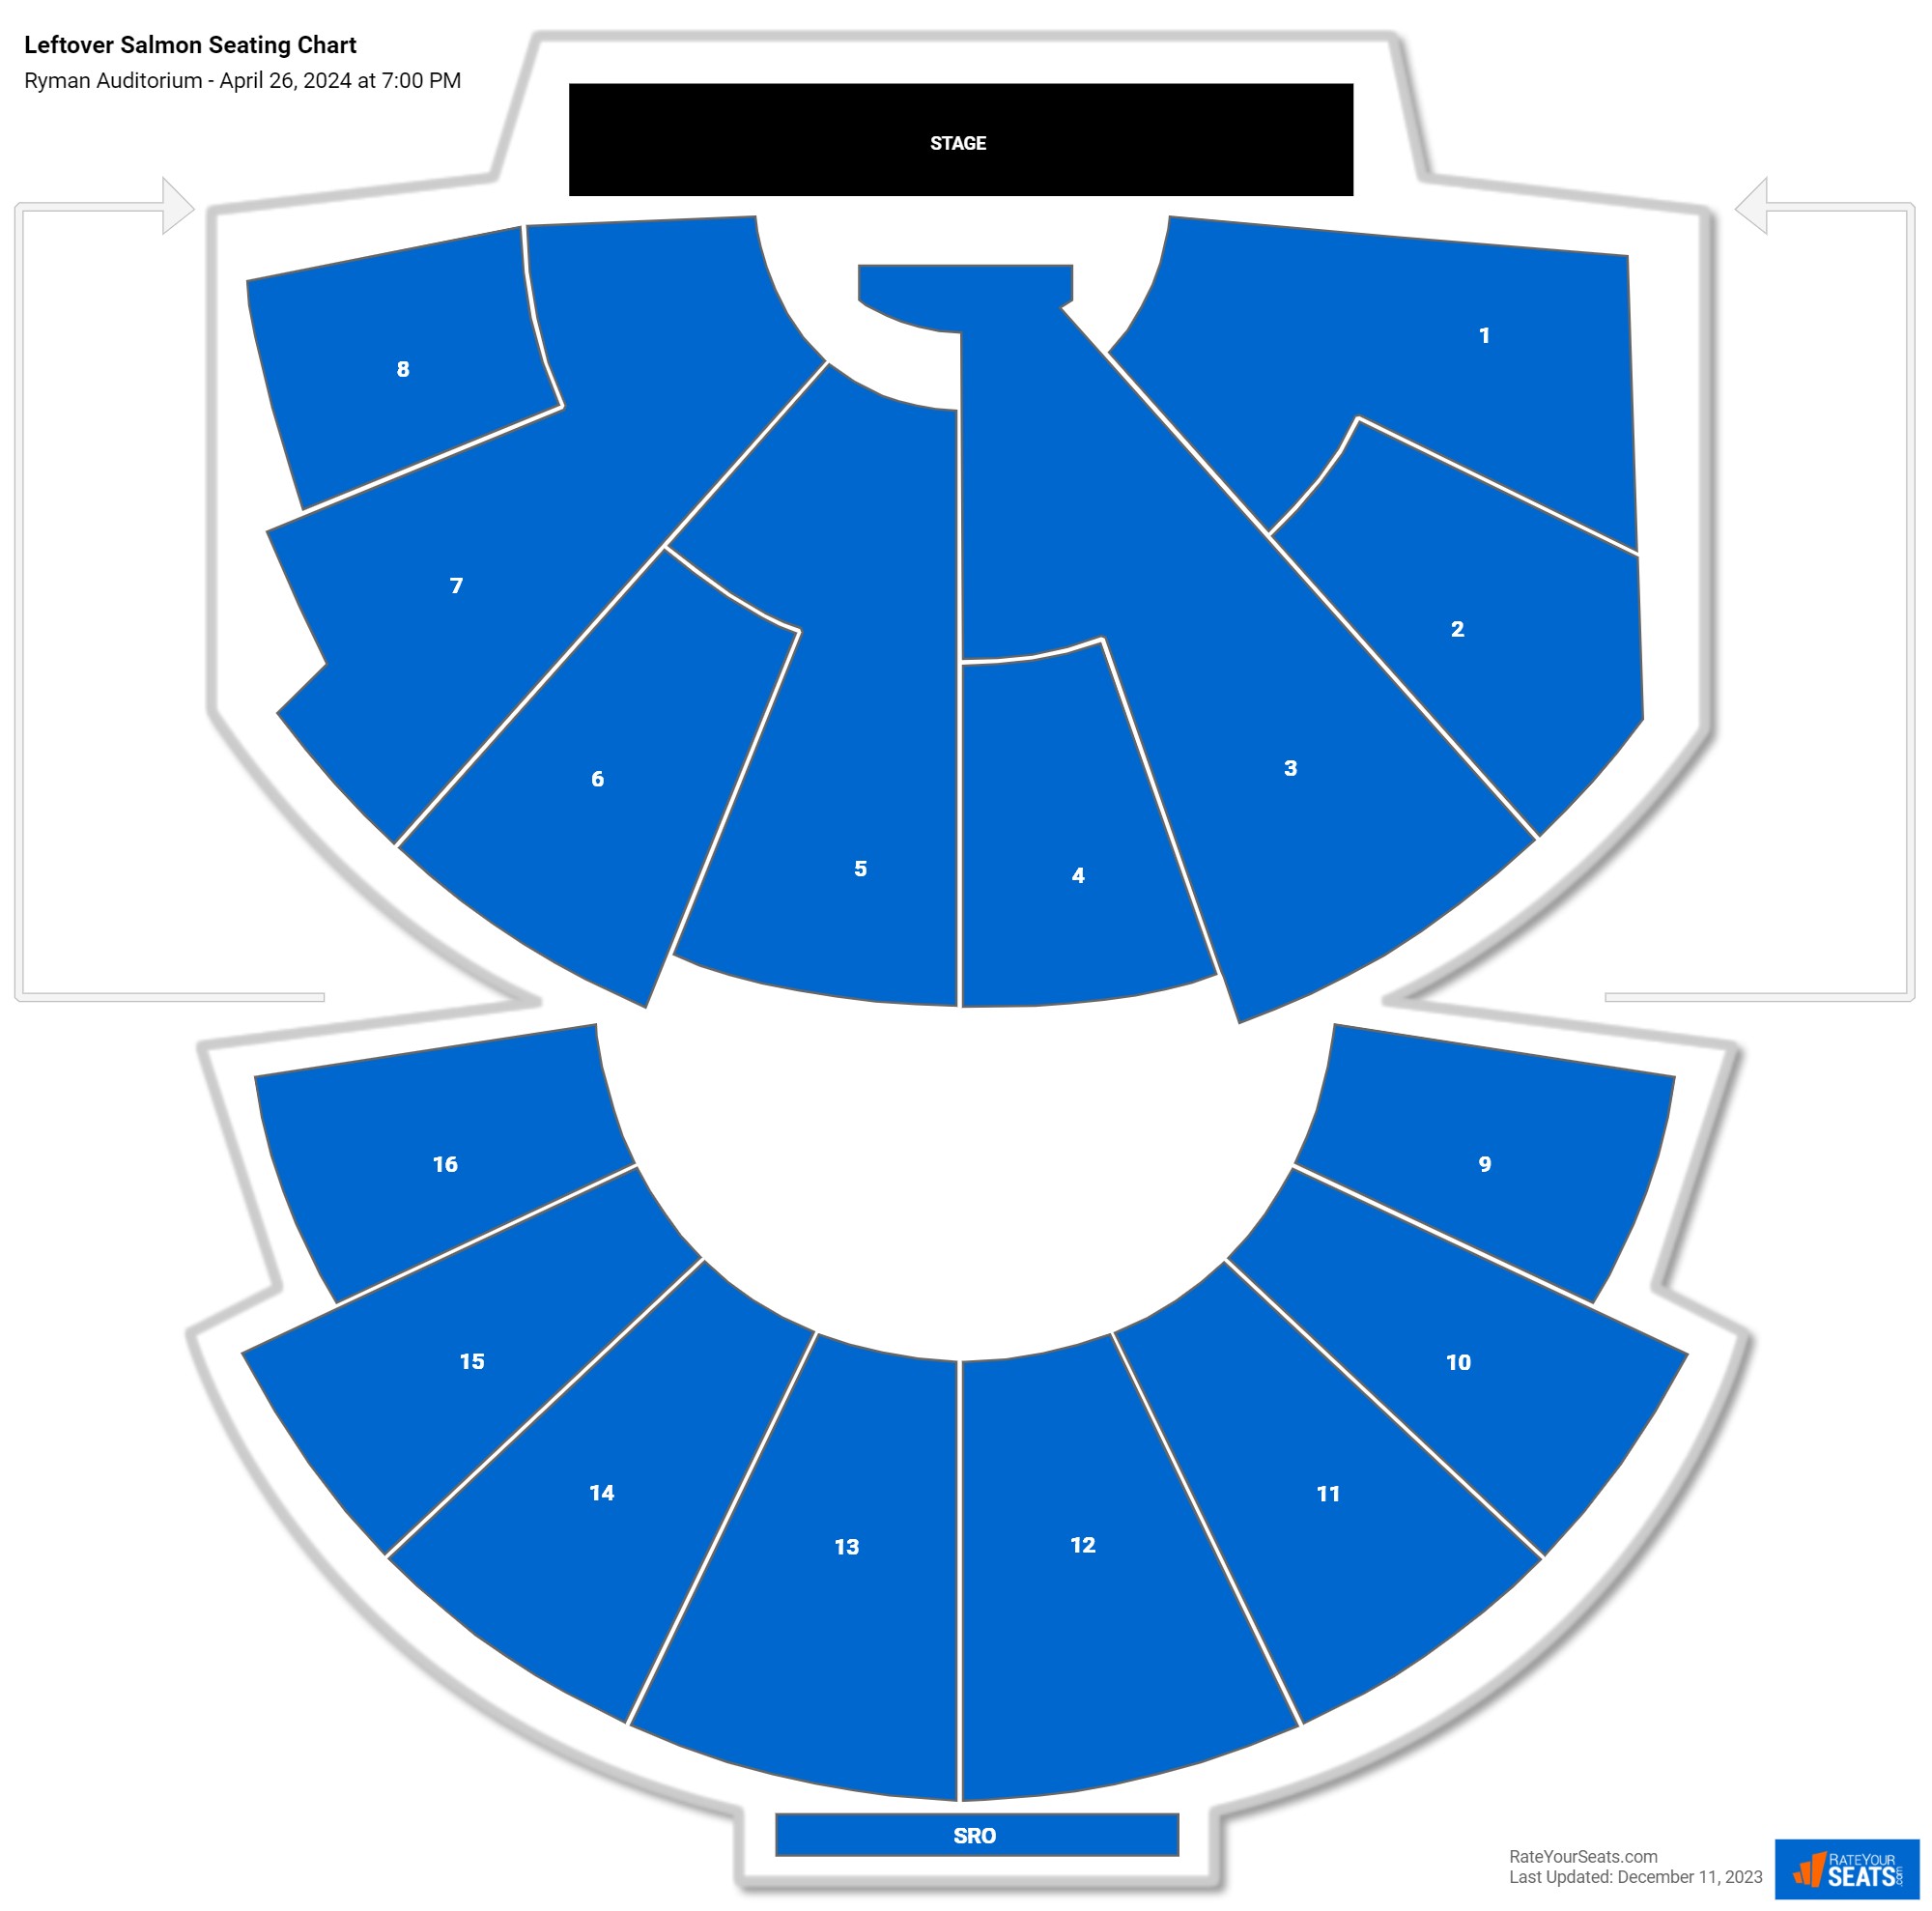 Leftover Salmon seating chart Ryman Auditorium